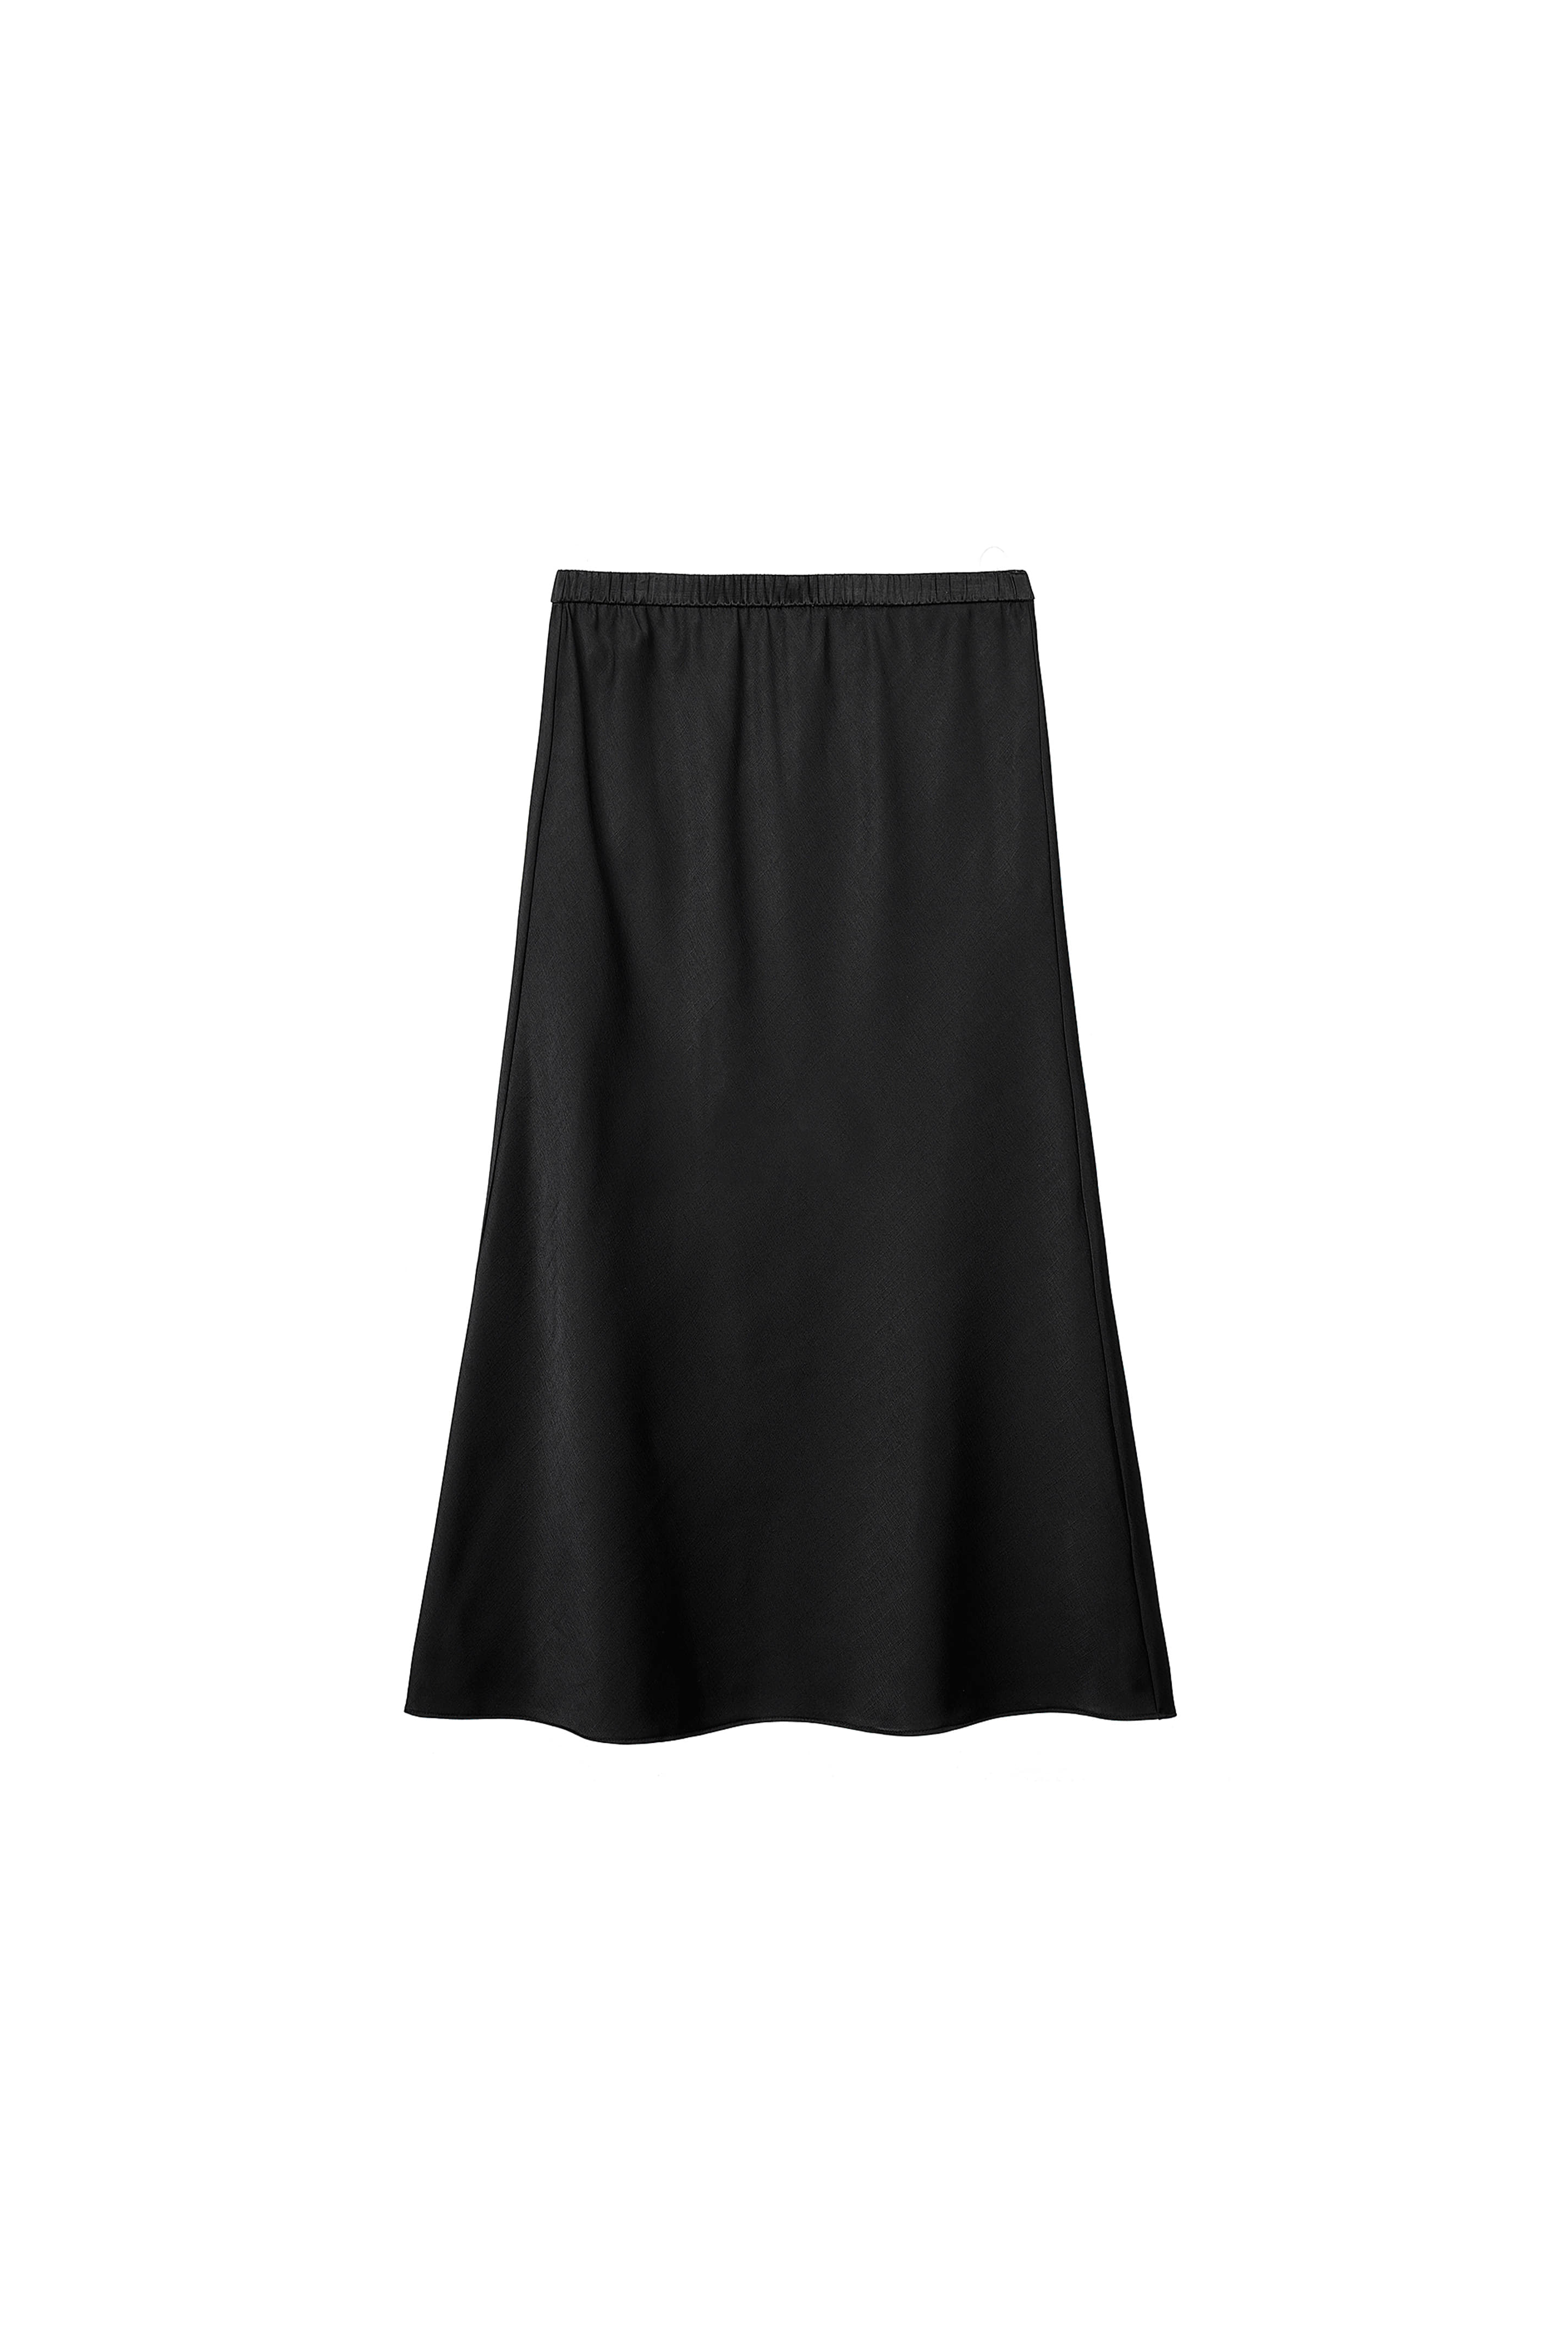 4th) Besset Skirt Black